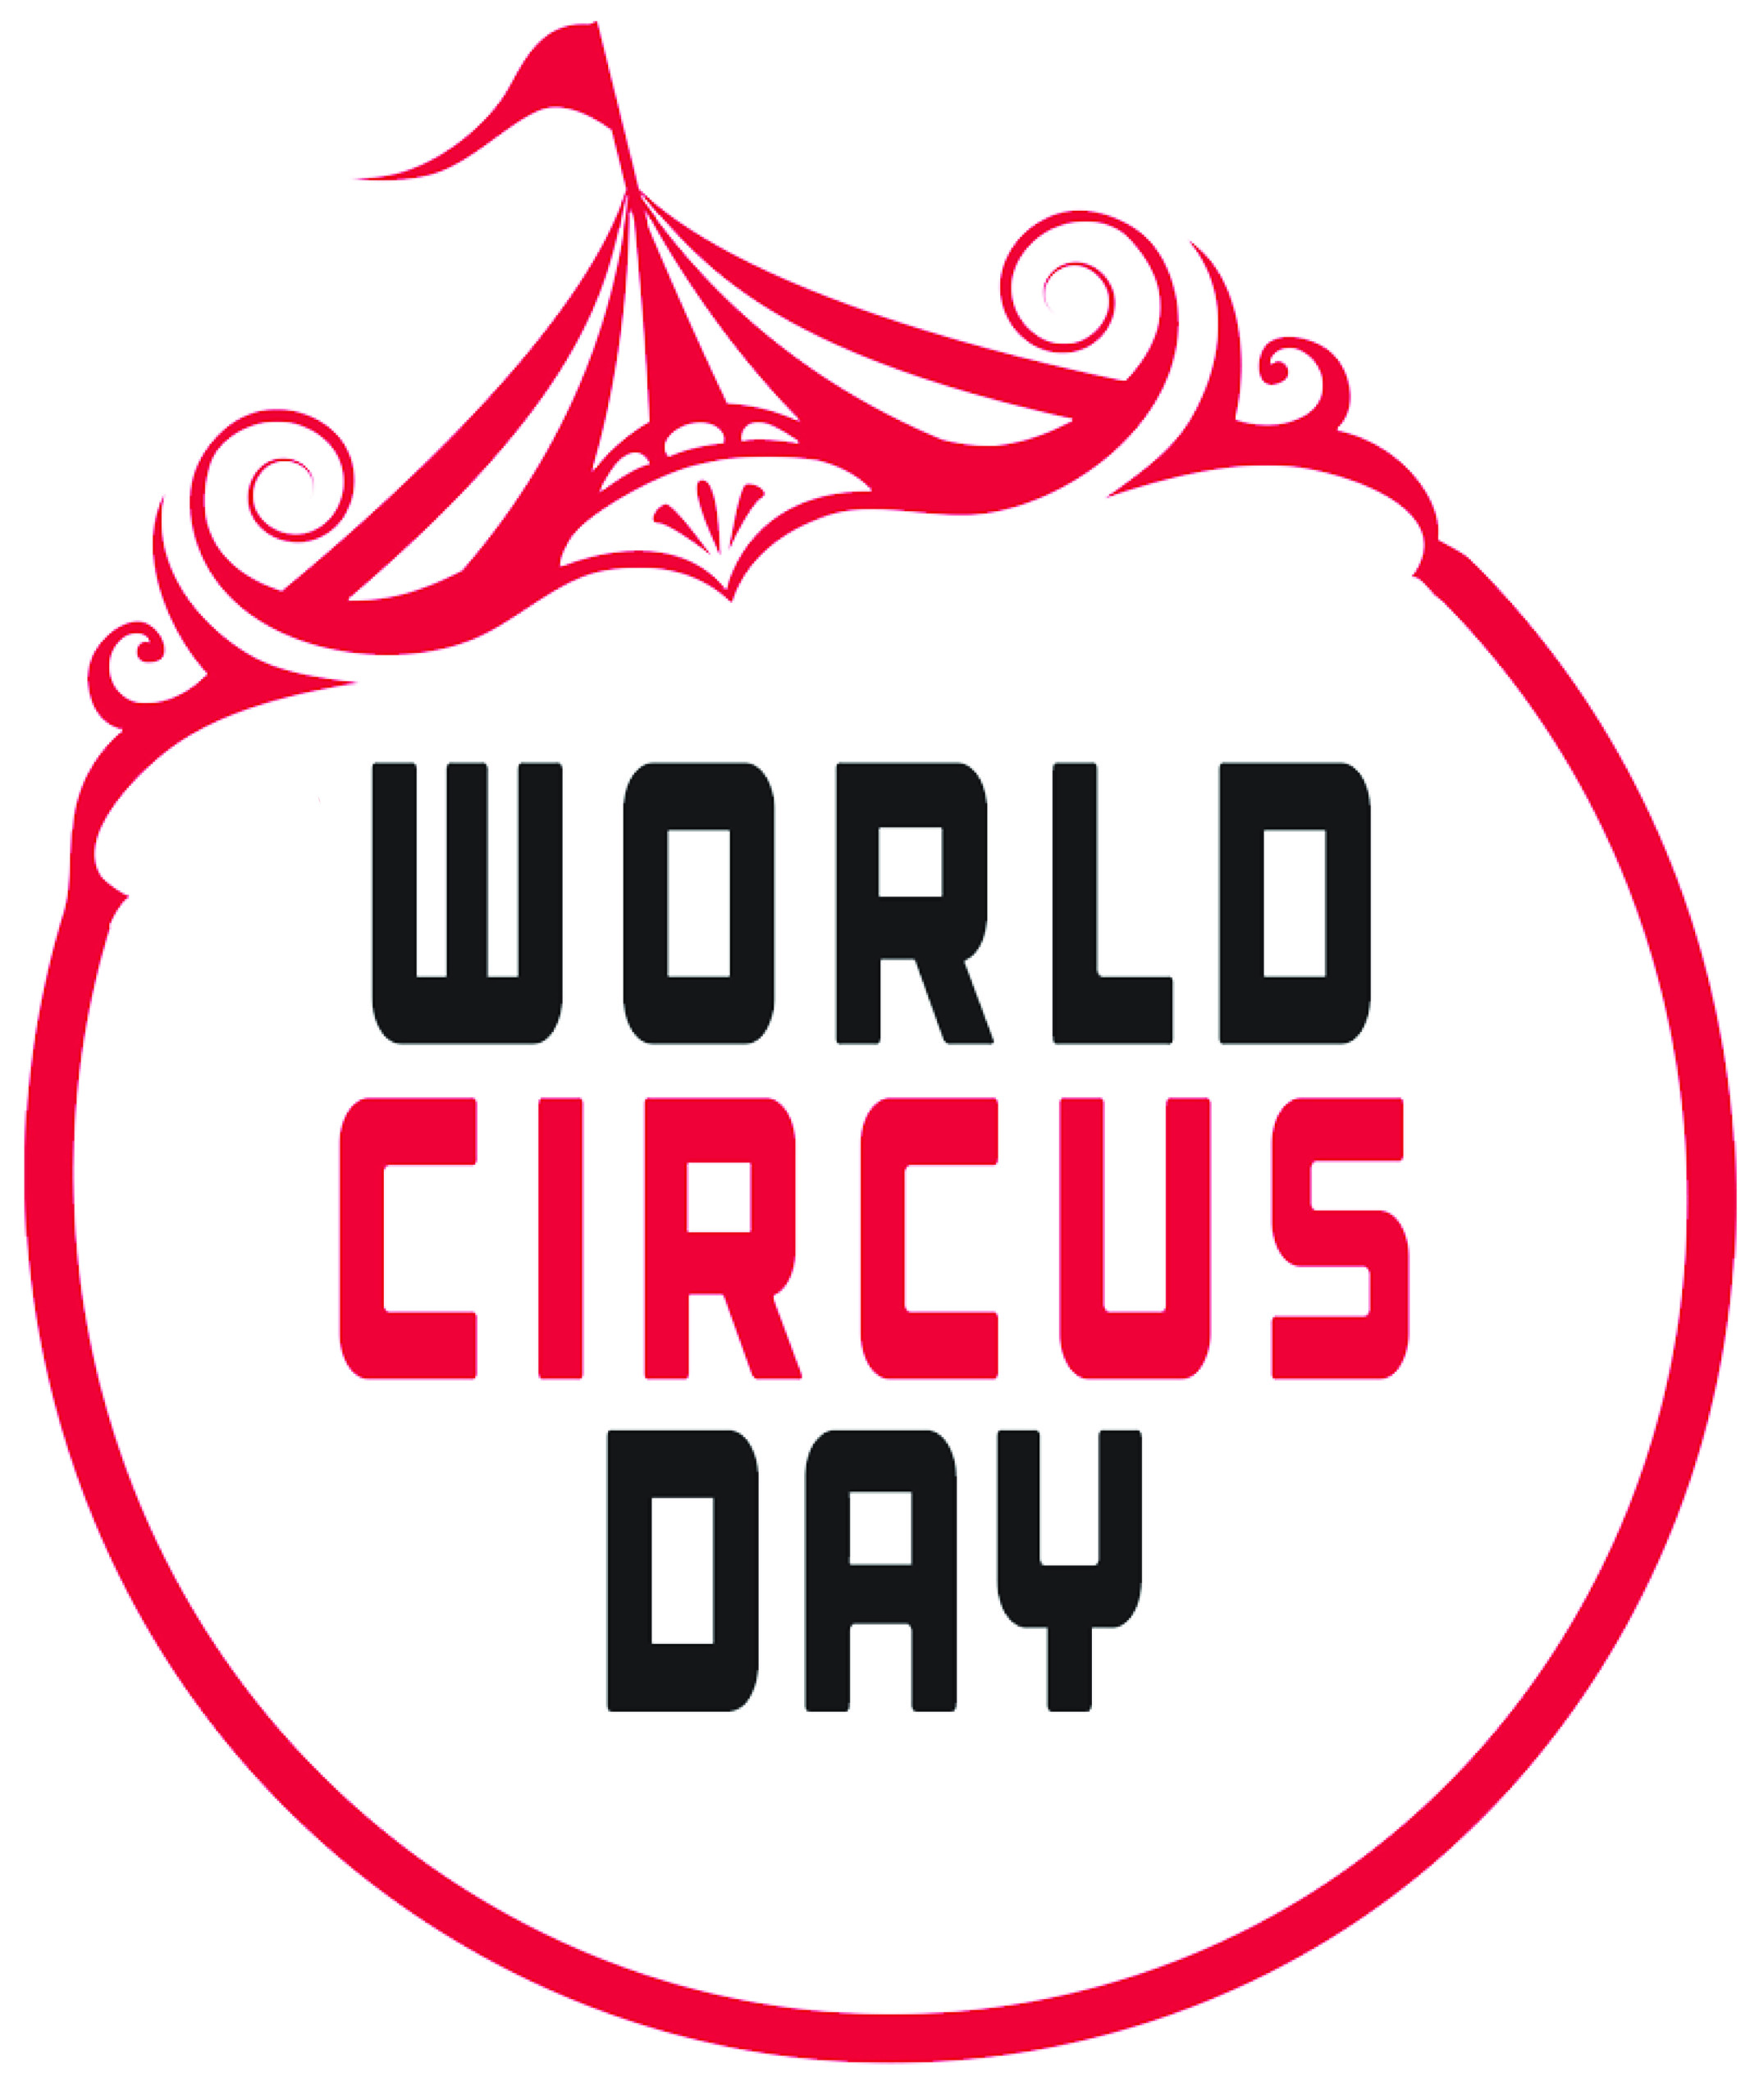 World Circus Day